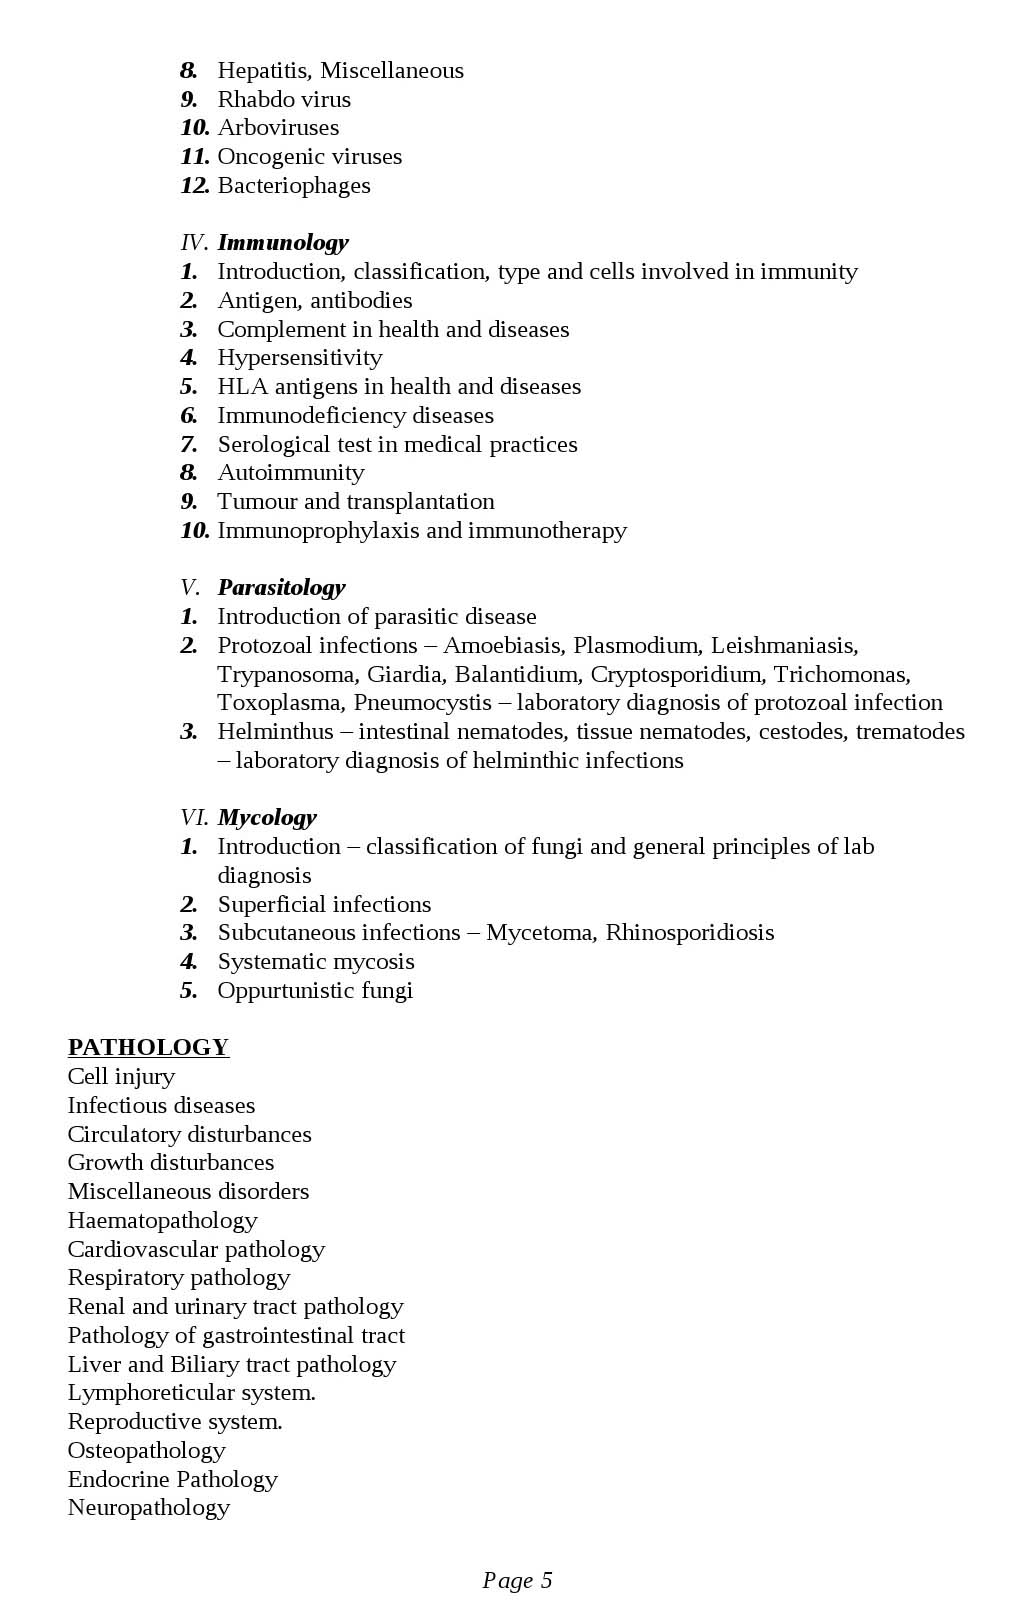 Kerala PSC Assistant Surgeon Exam Syllabus May 2020 - Notification Image 5